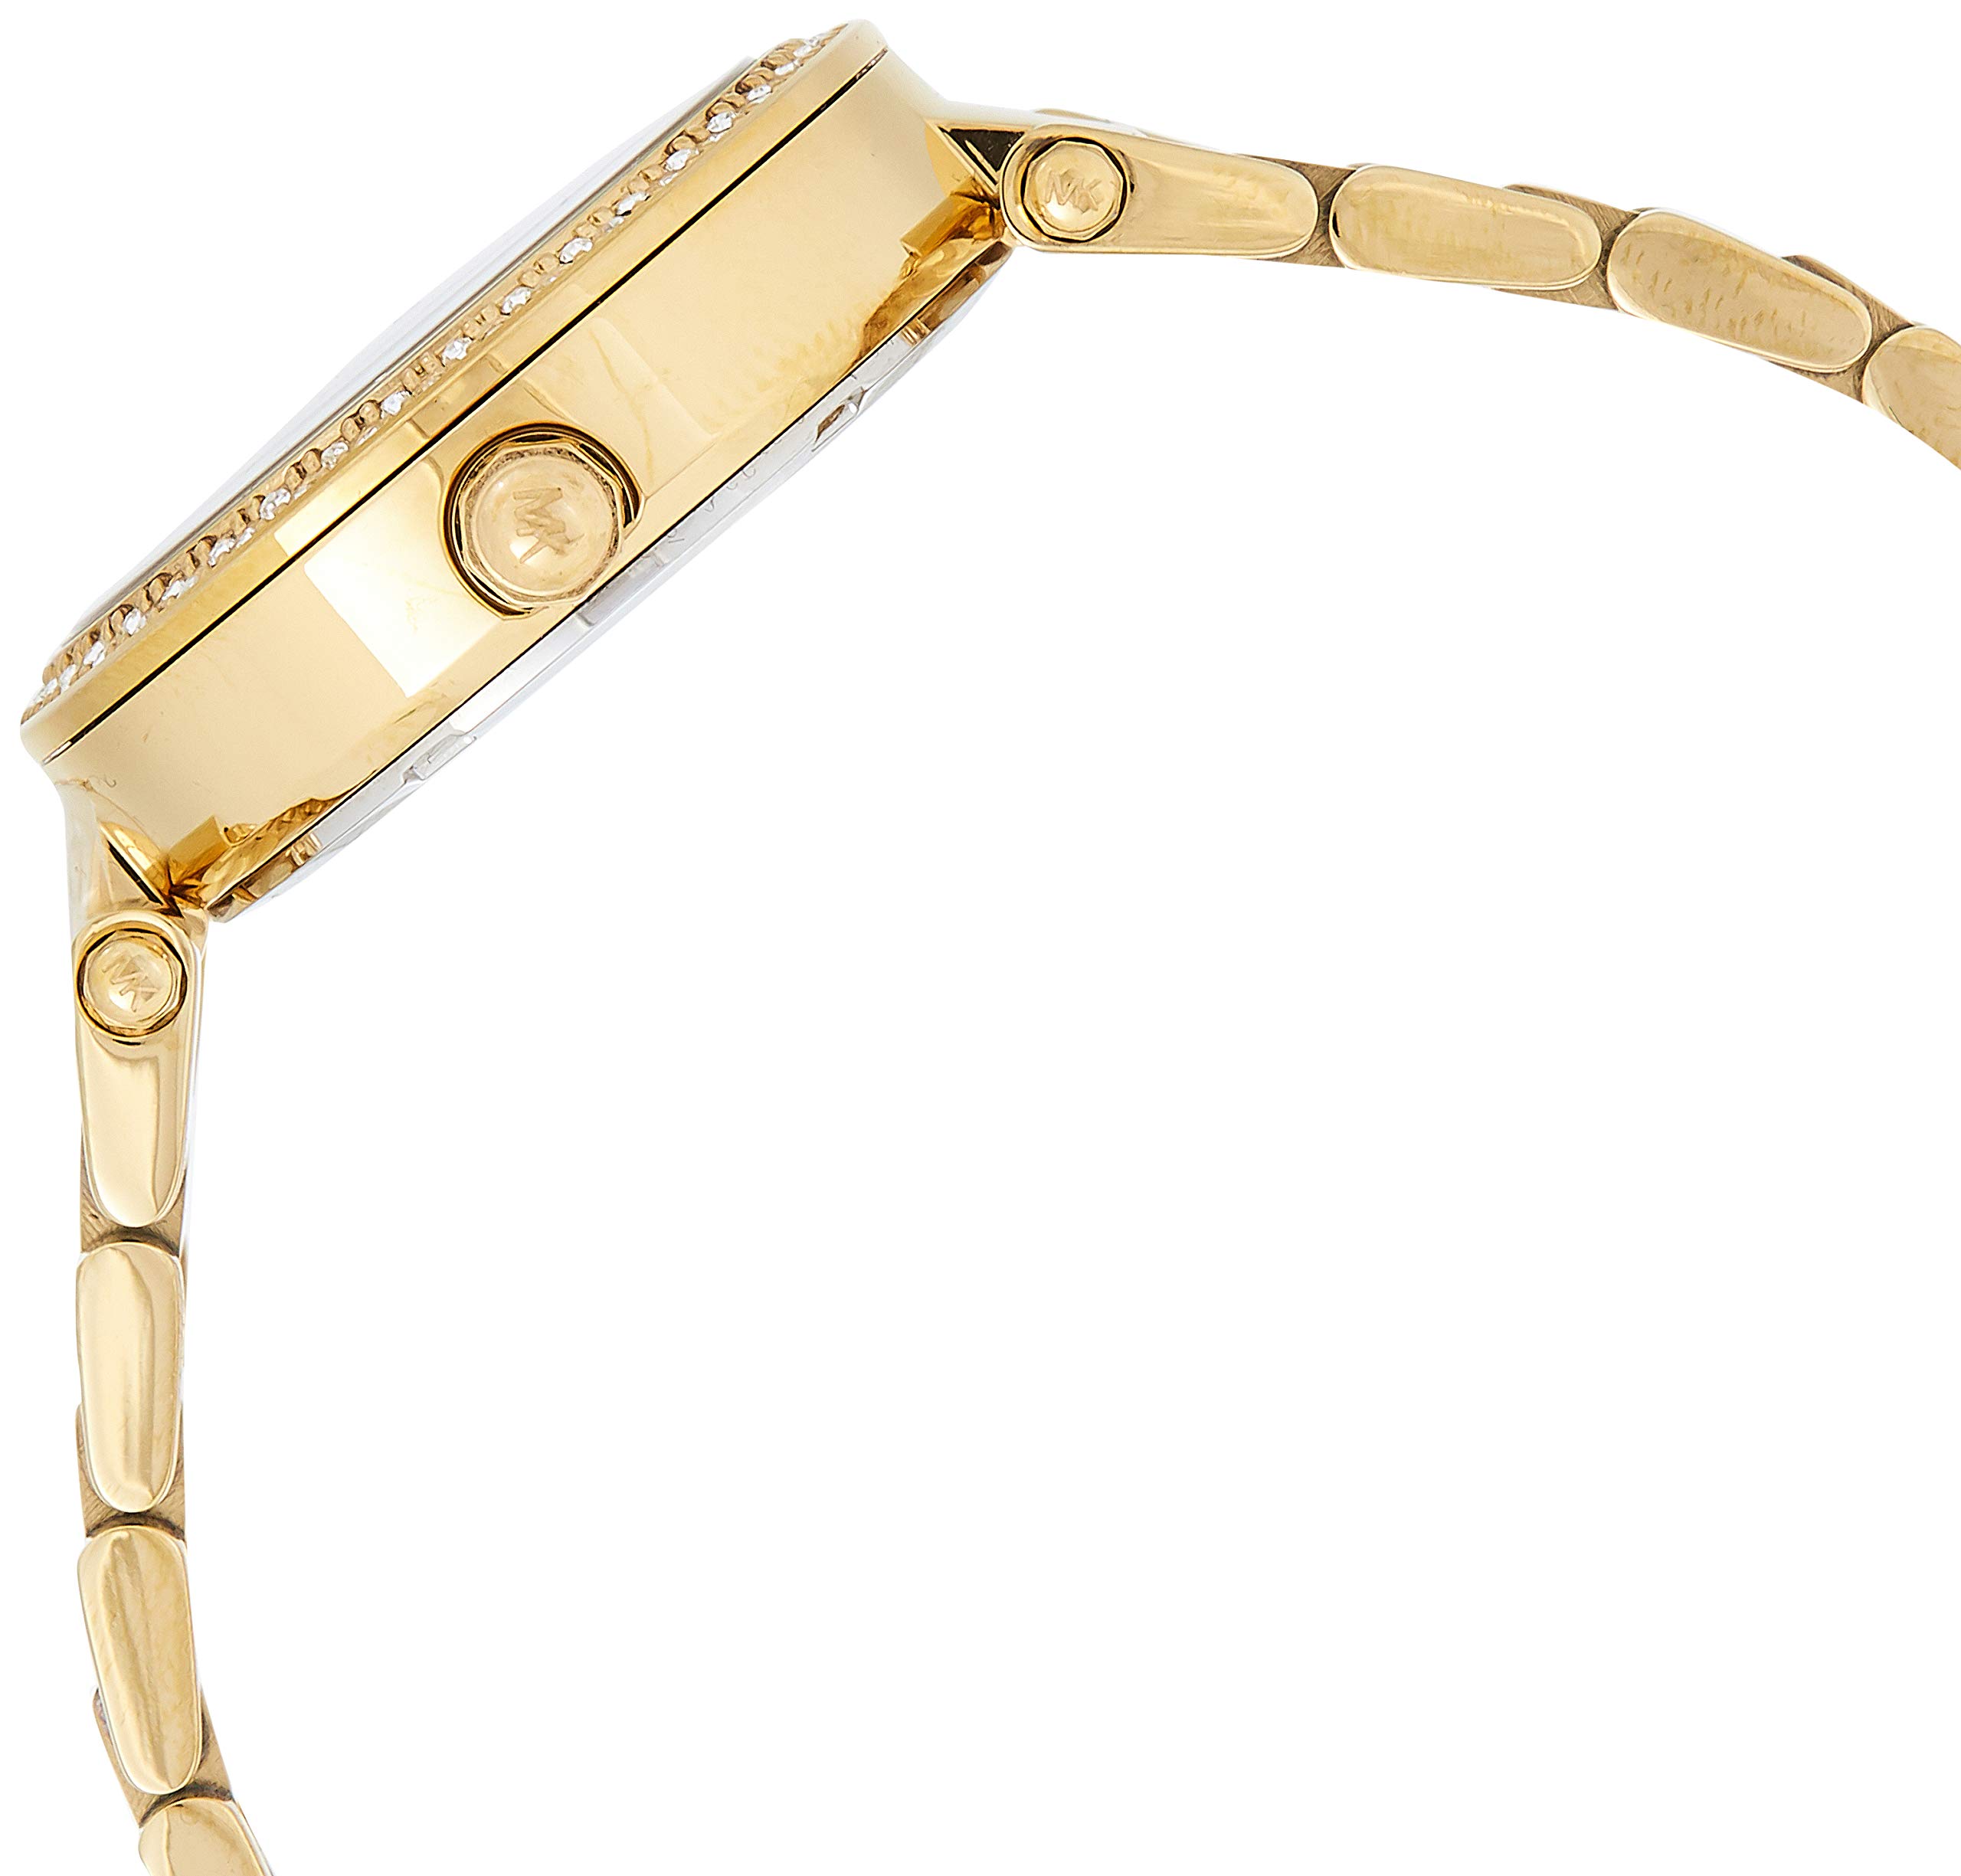 Michael Kors Women's Parker Gold-Tone Watch MK6056